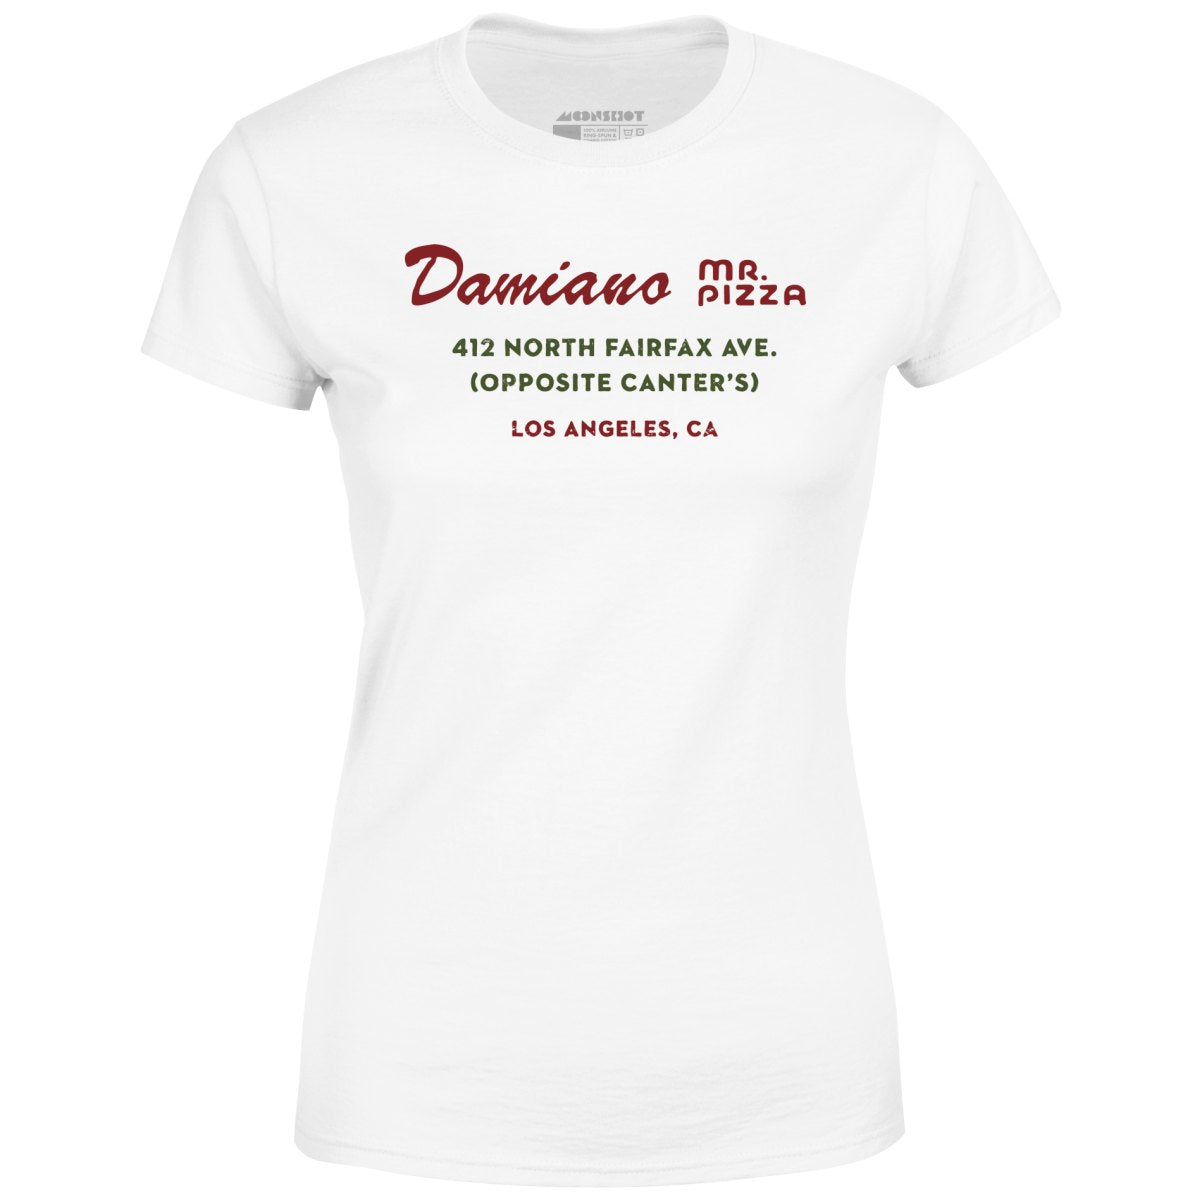 Damiano Mr. Pizza - Los Angeles, CA - Vintage Restaurant - Women's T-Shirt